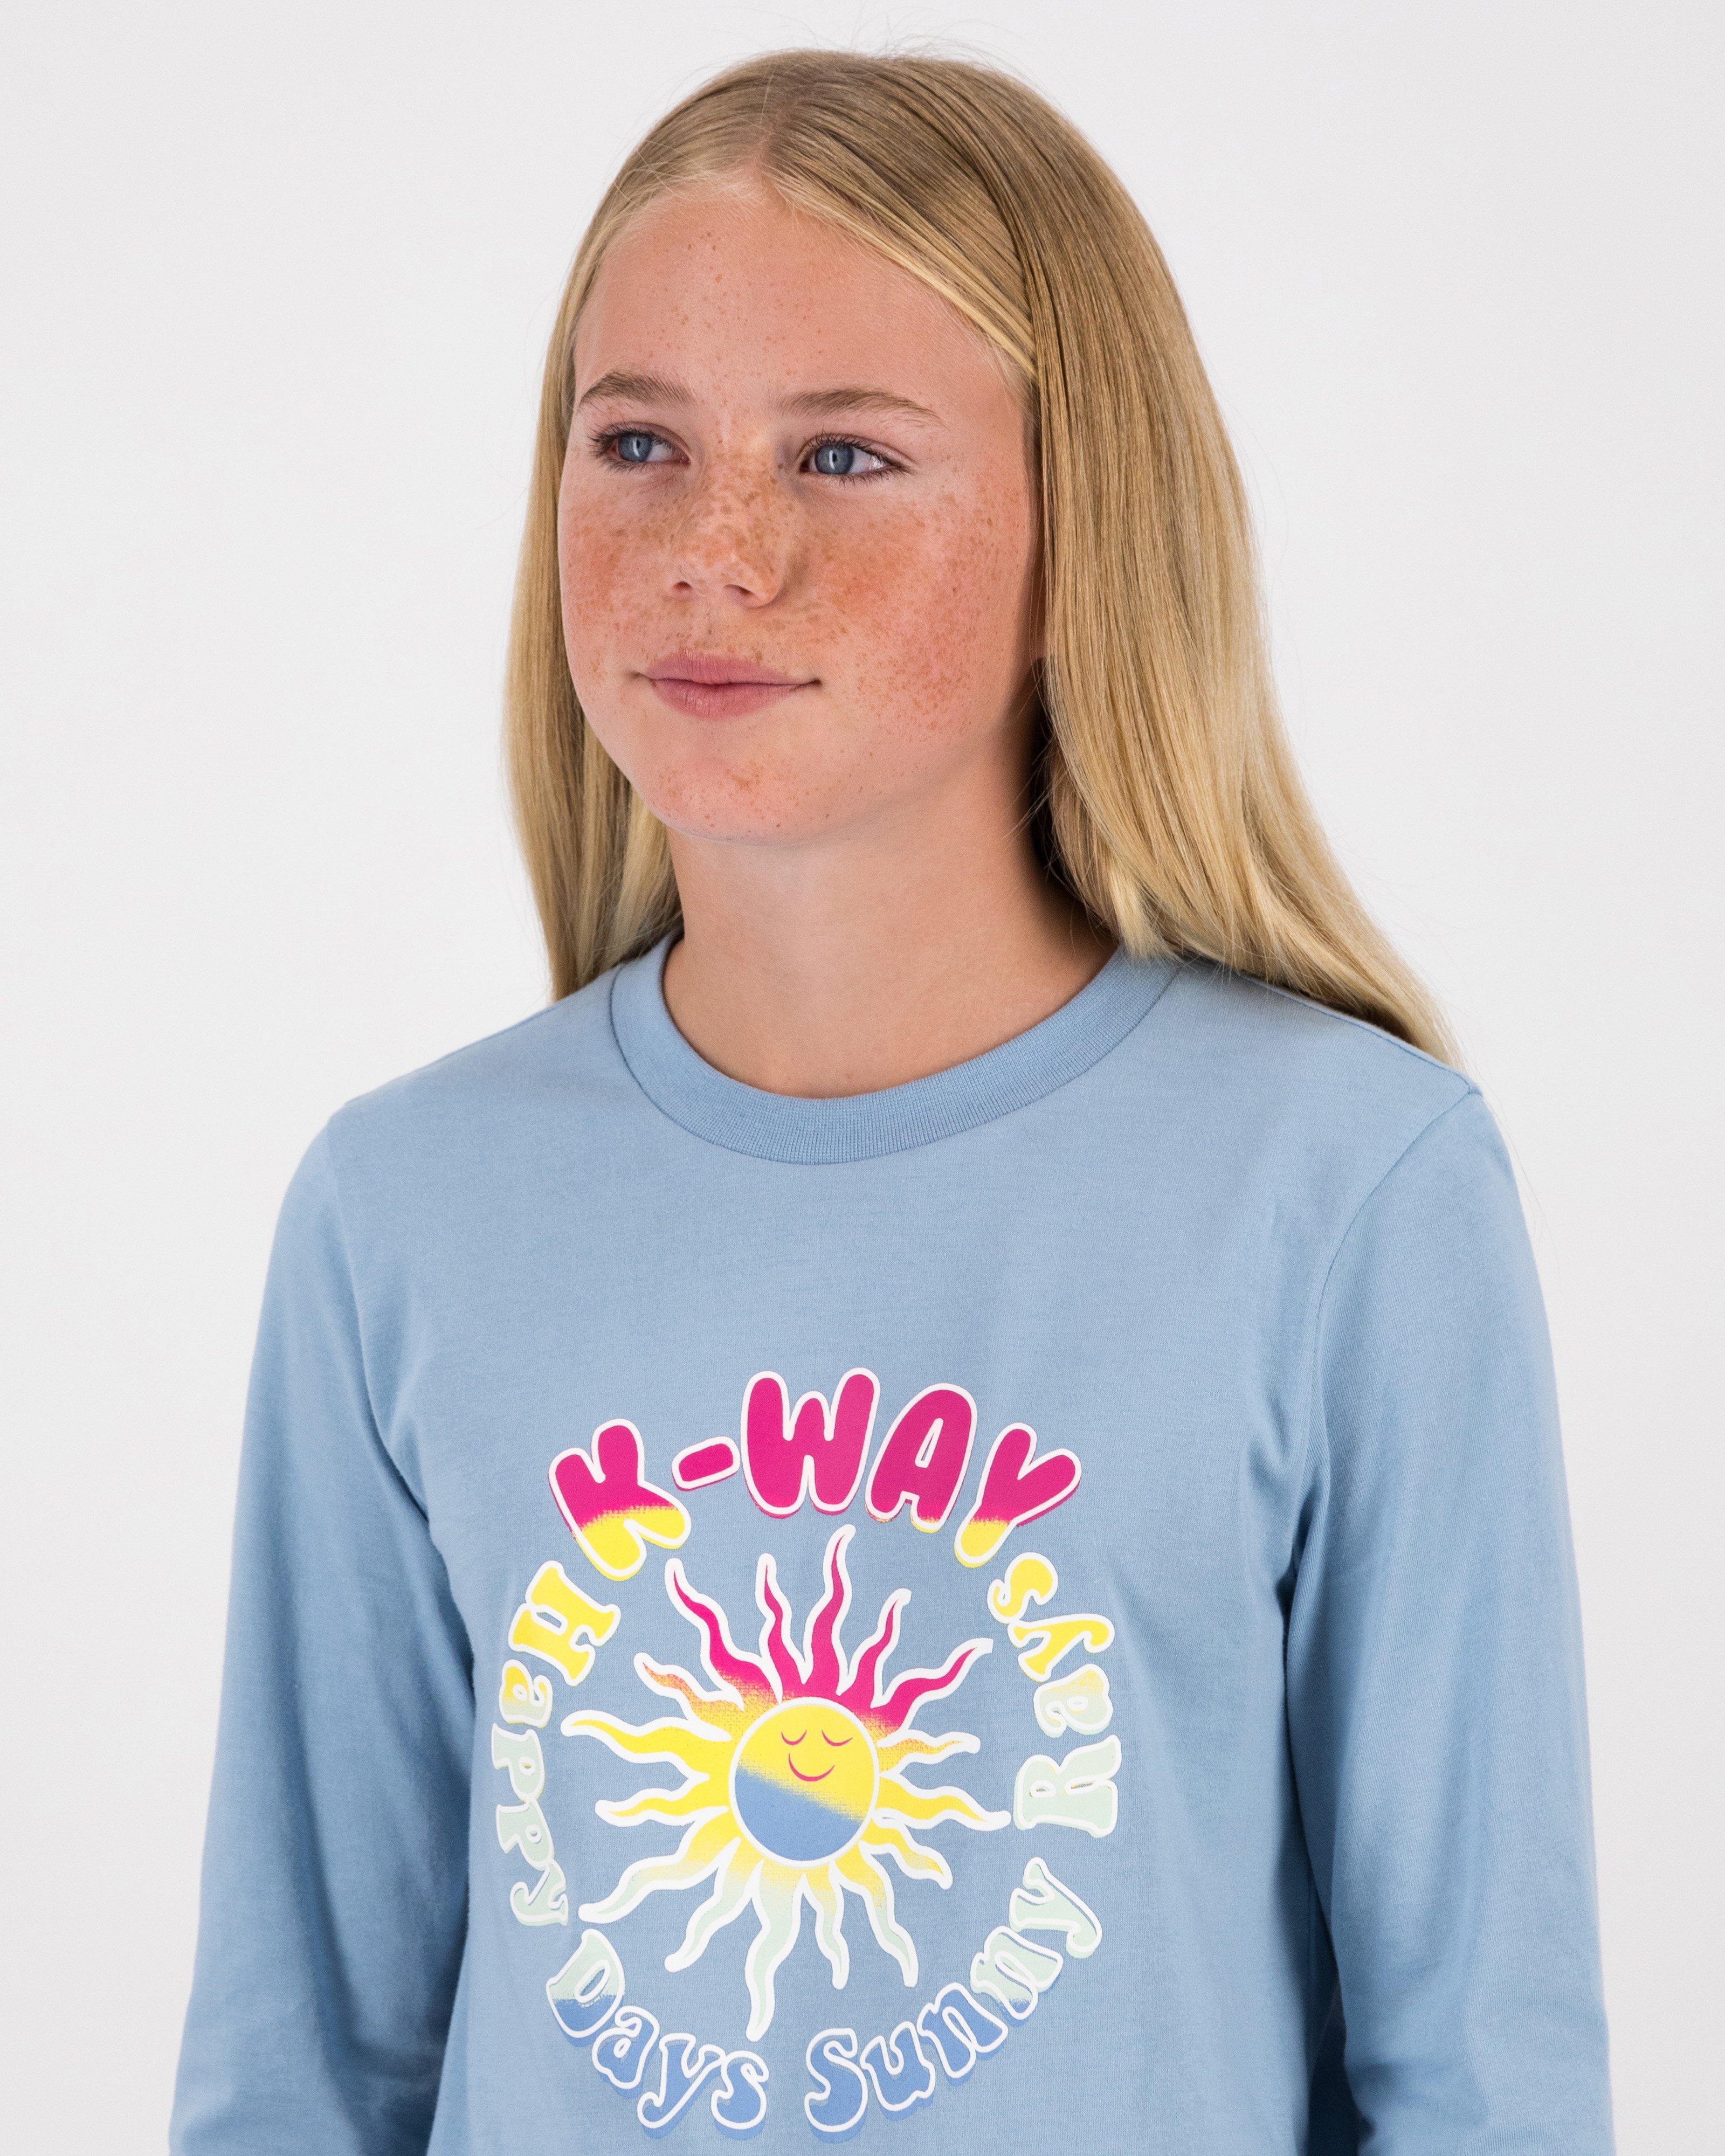 K-Way Youth Adventure Club Girls' T-shirt -  Cloud Blue